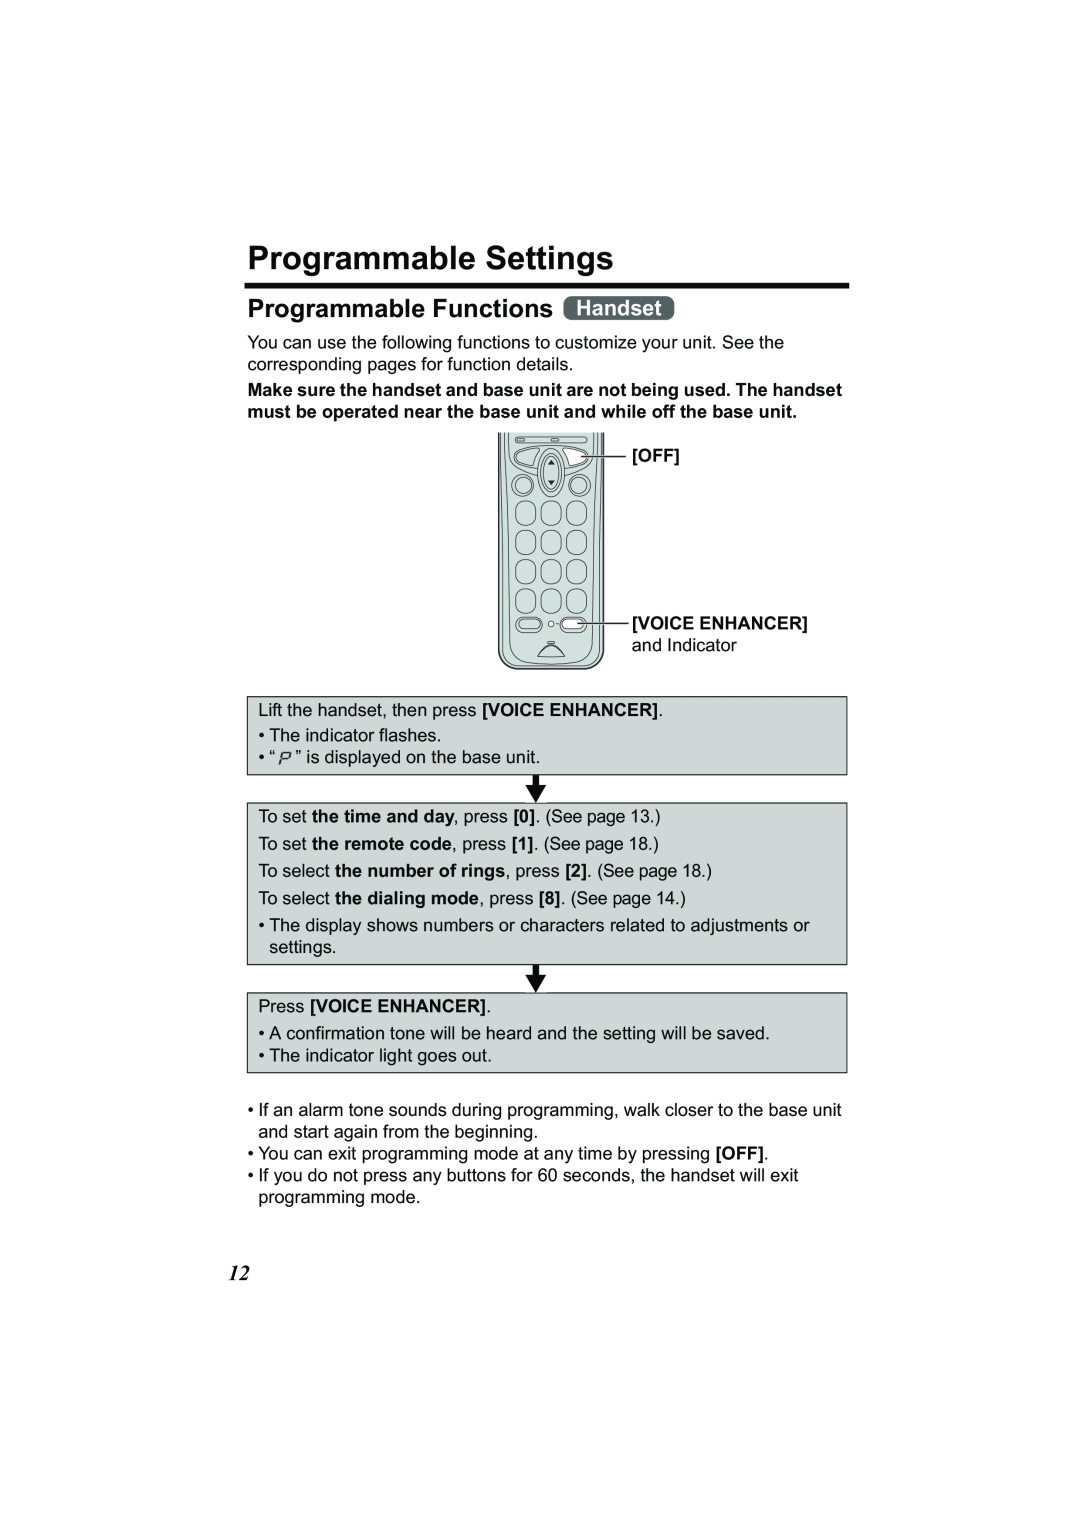 Panasonic Acr14CF.tmp manual Programmable Settings, Programmable Functions Handset 